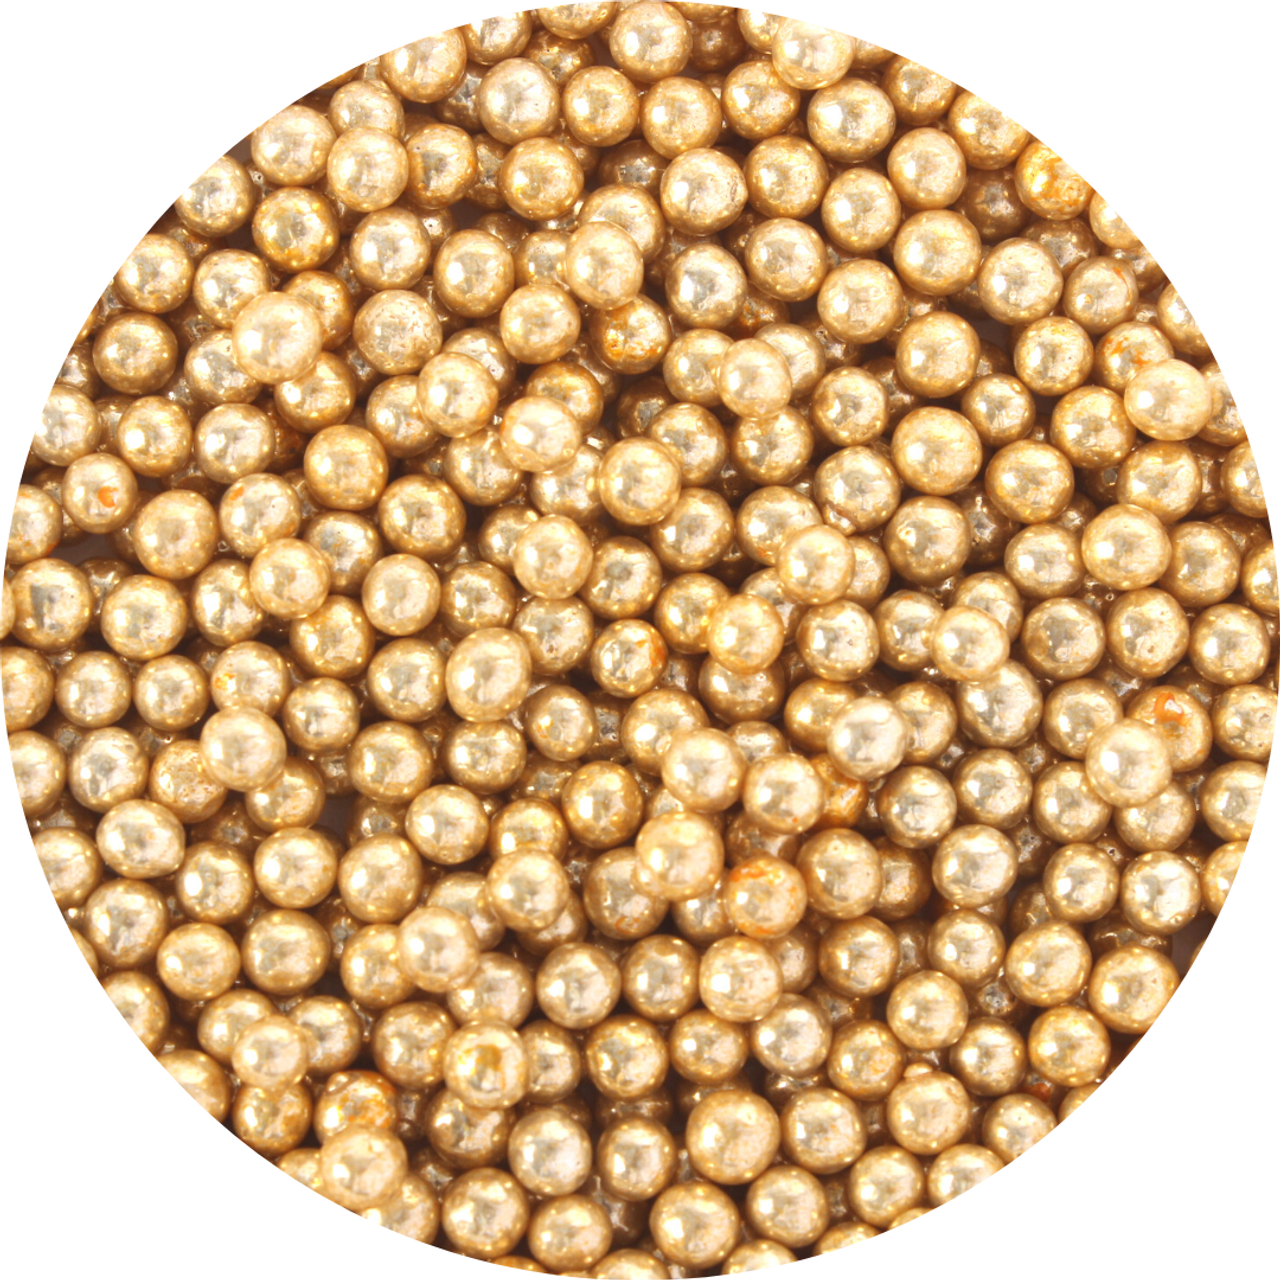 METALLIC GOLD 2mm EDIBLE CACHOUS PEARLS - 1KG